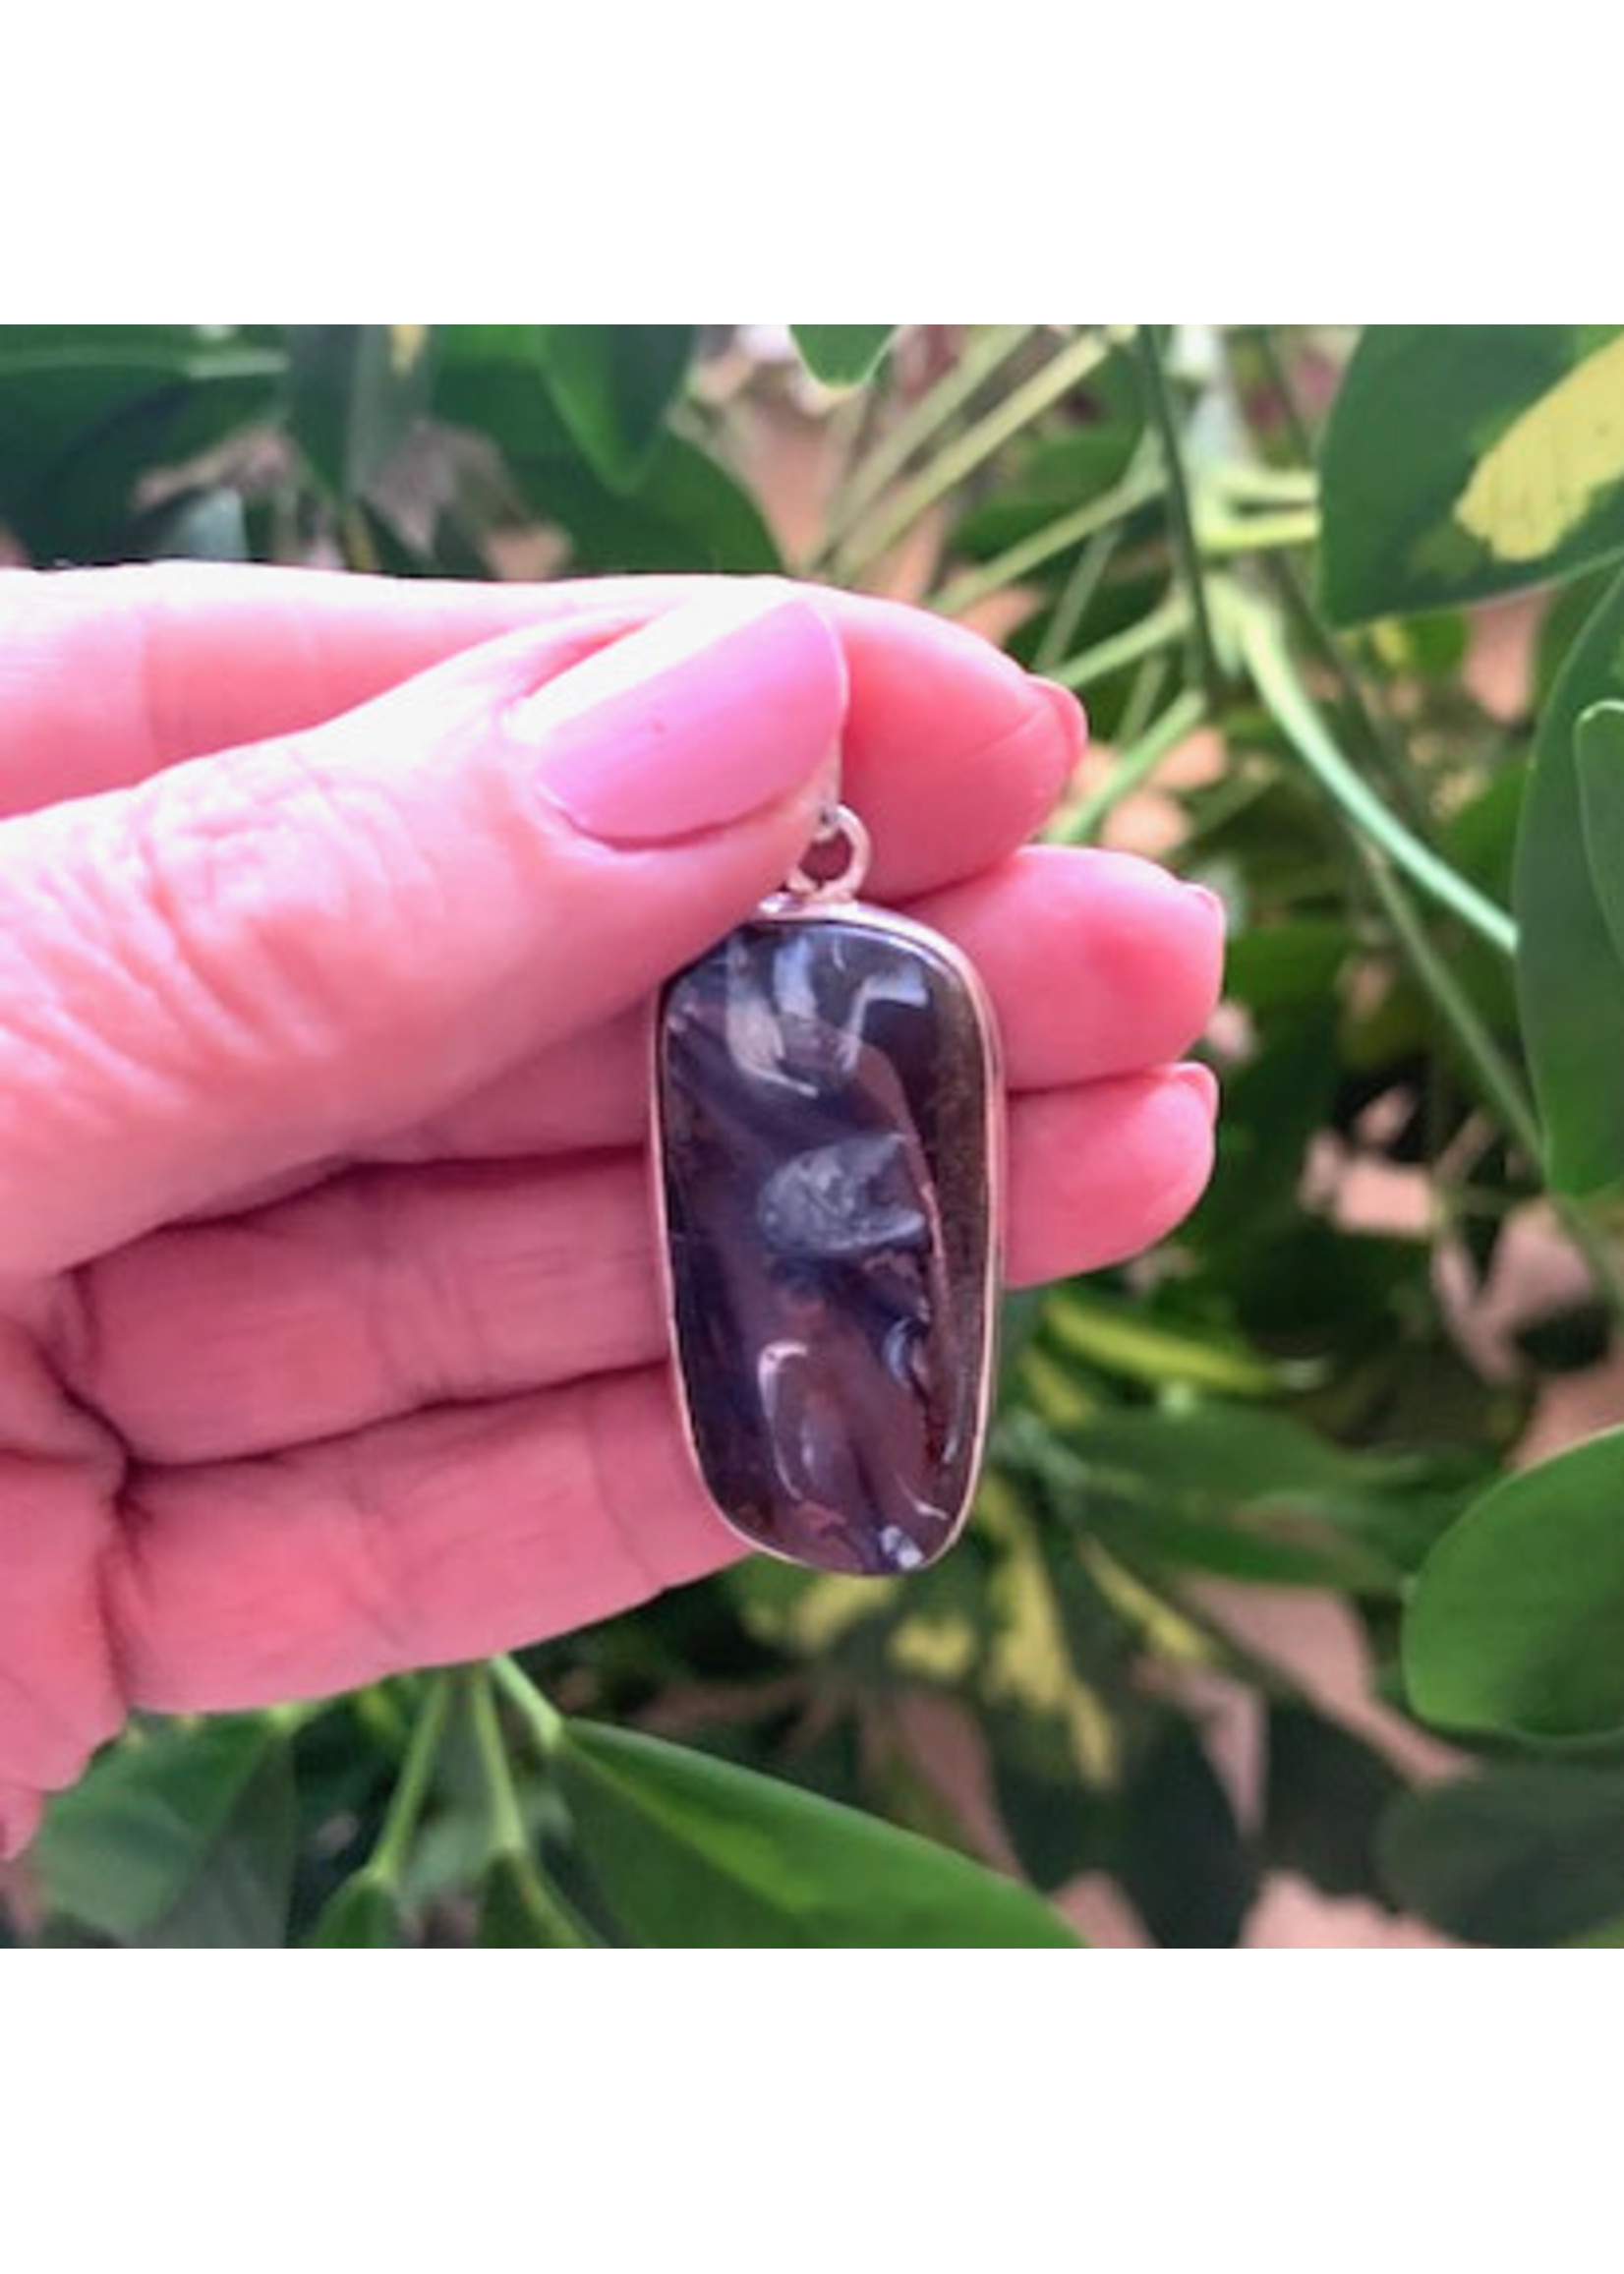 Boulder Opal Pendant for stimulating body and soul